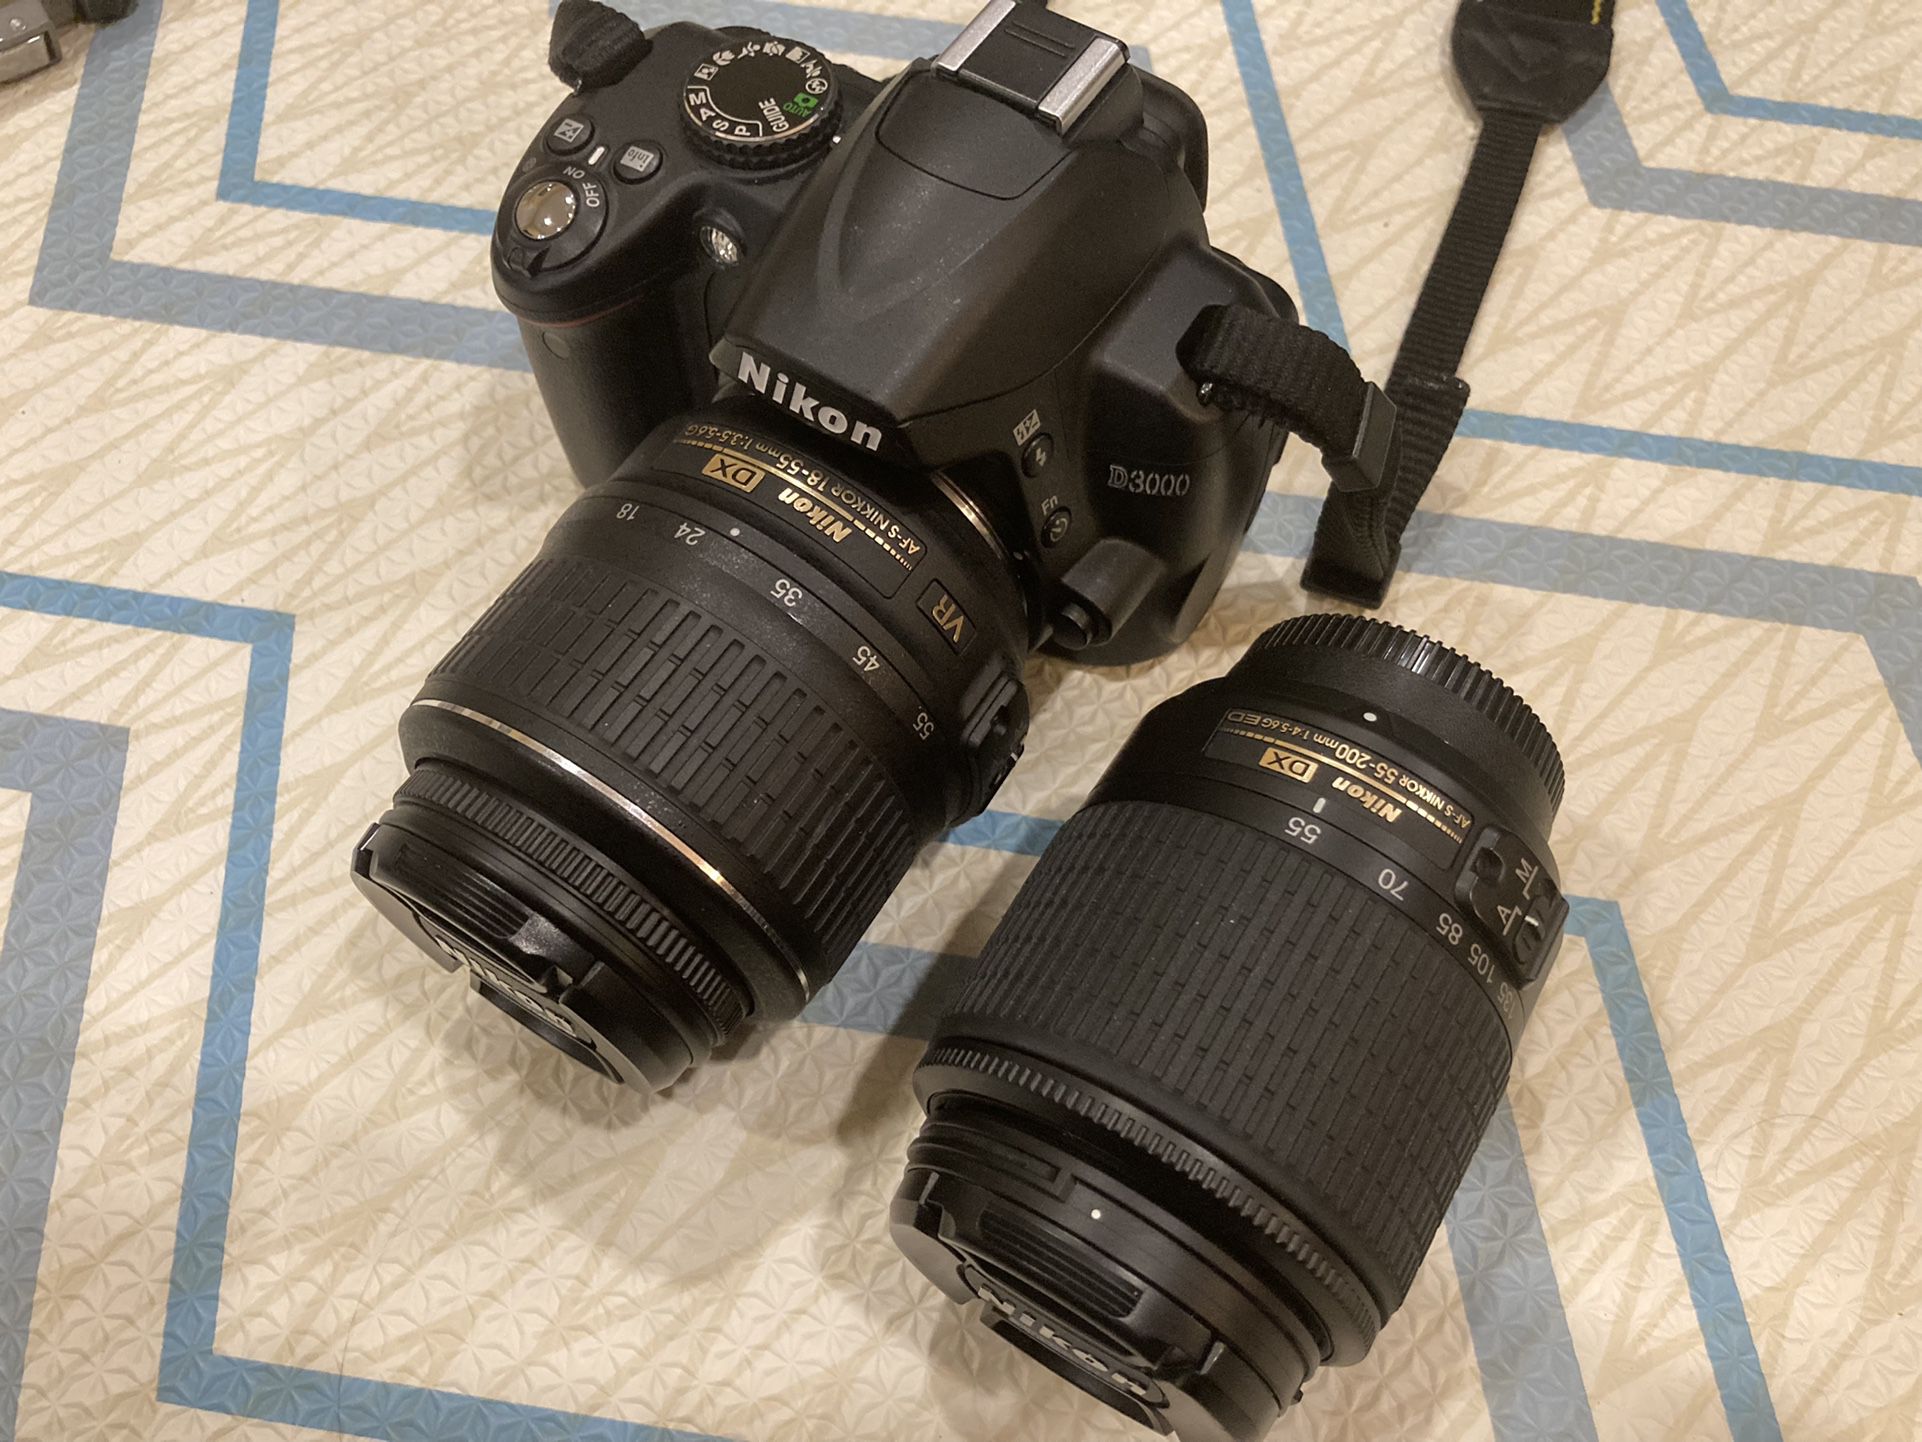 Nikon D3000 - Like New Condition 